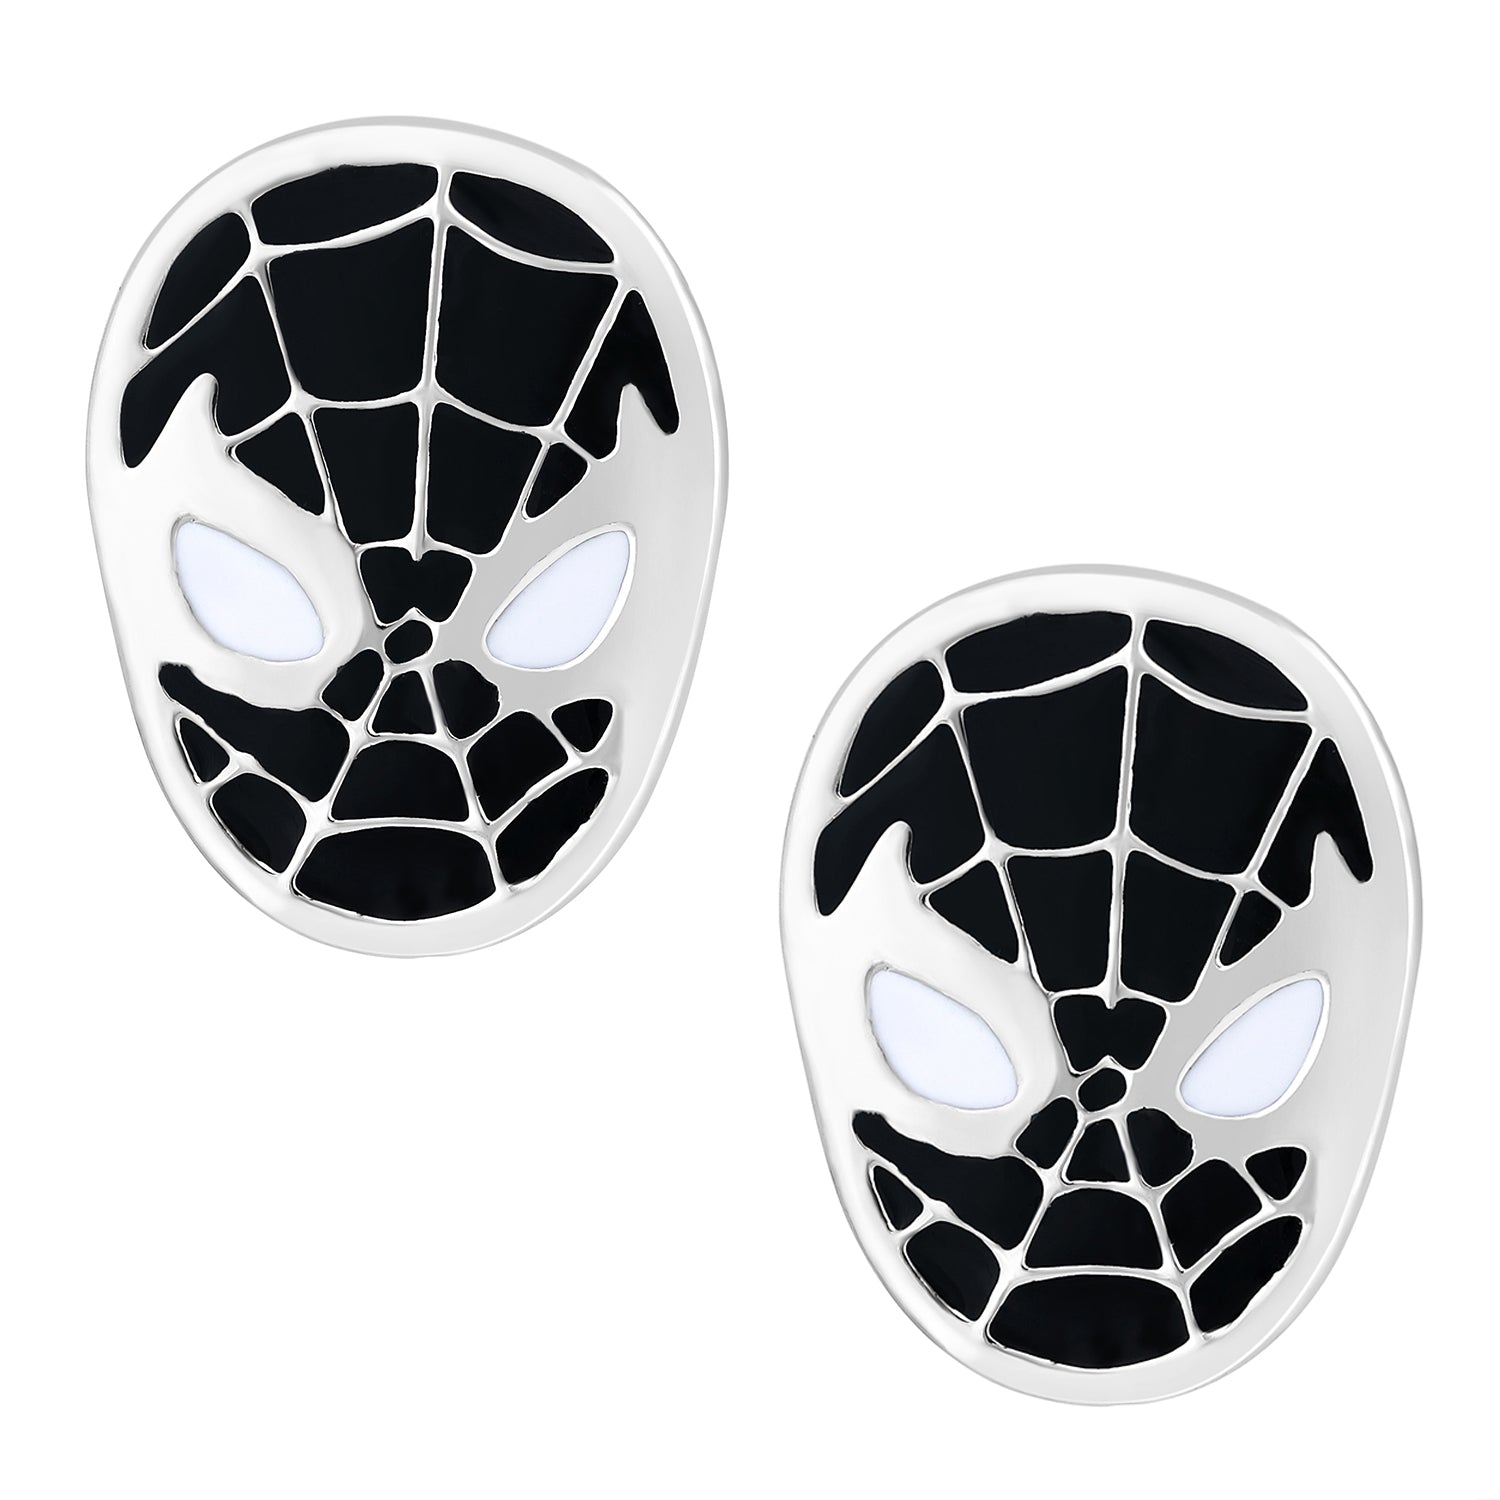 Superhero Design Black and White Meena Enamelled Cufflink Set